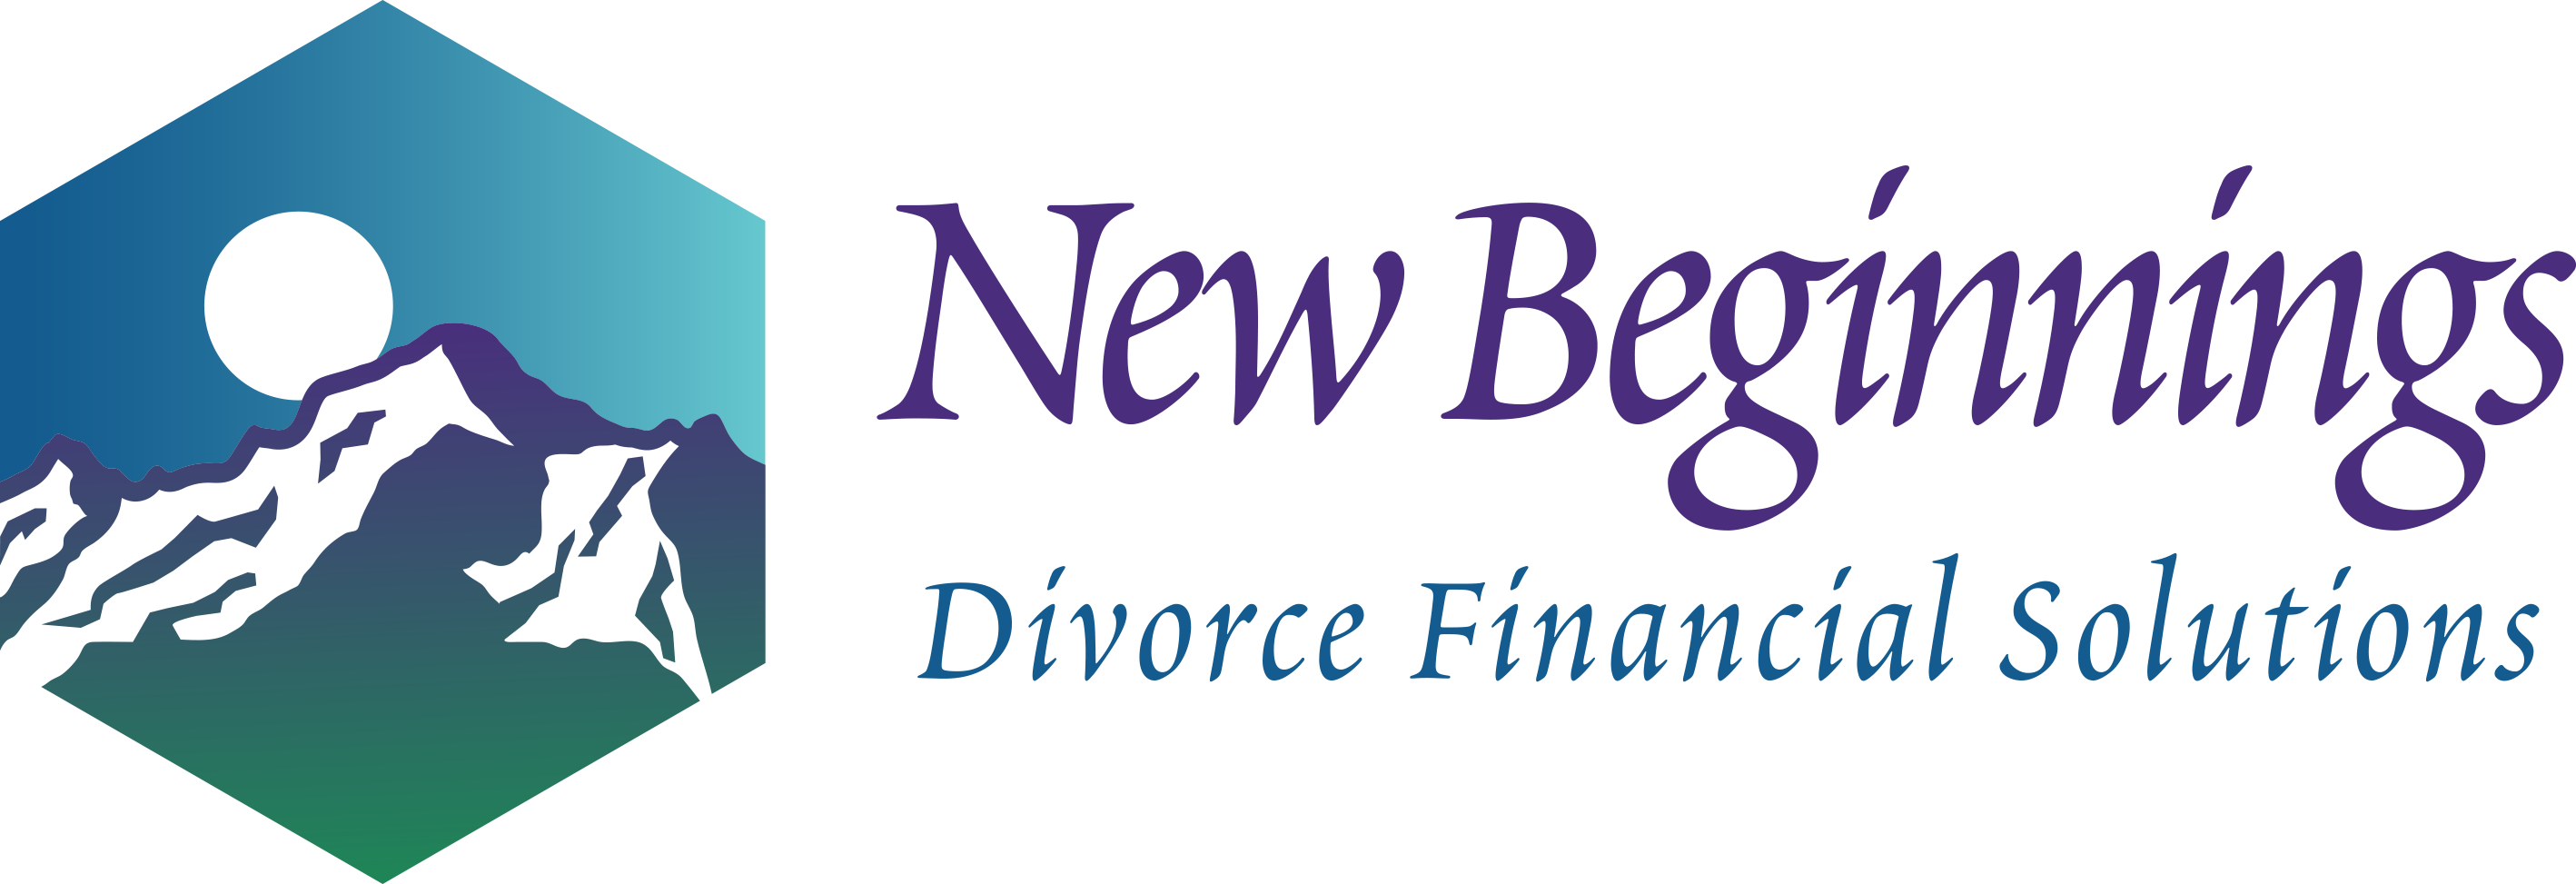 New Beginnings Divorce Financial Solutions